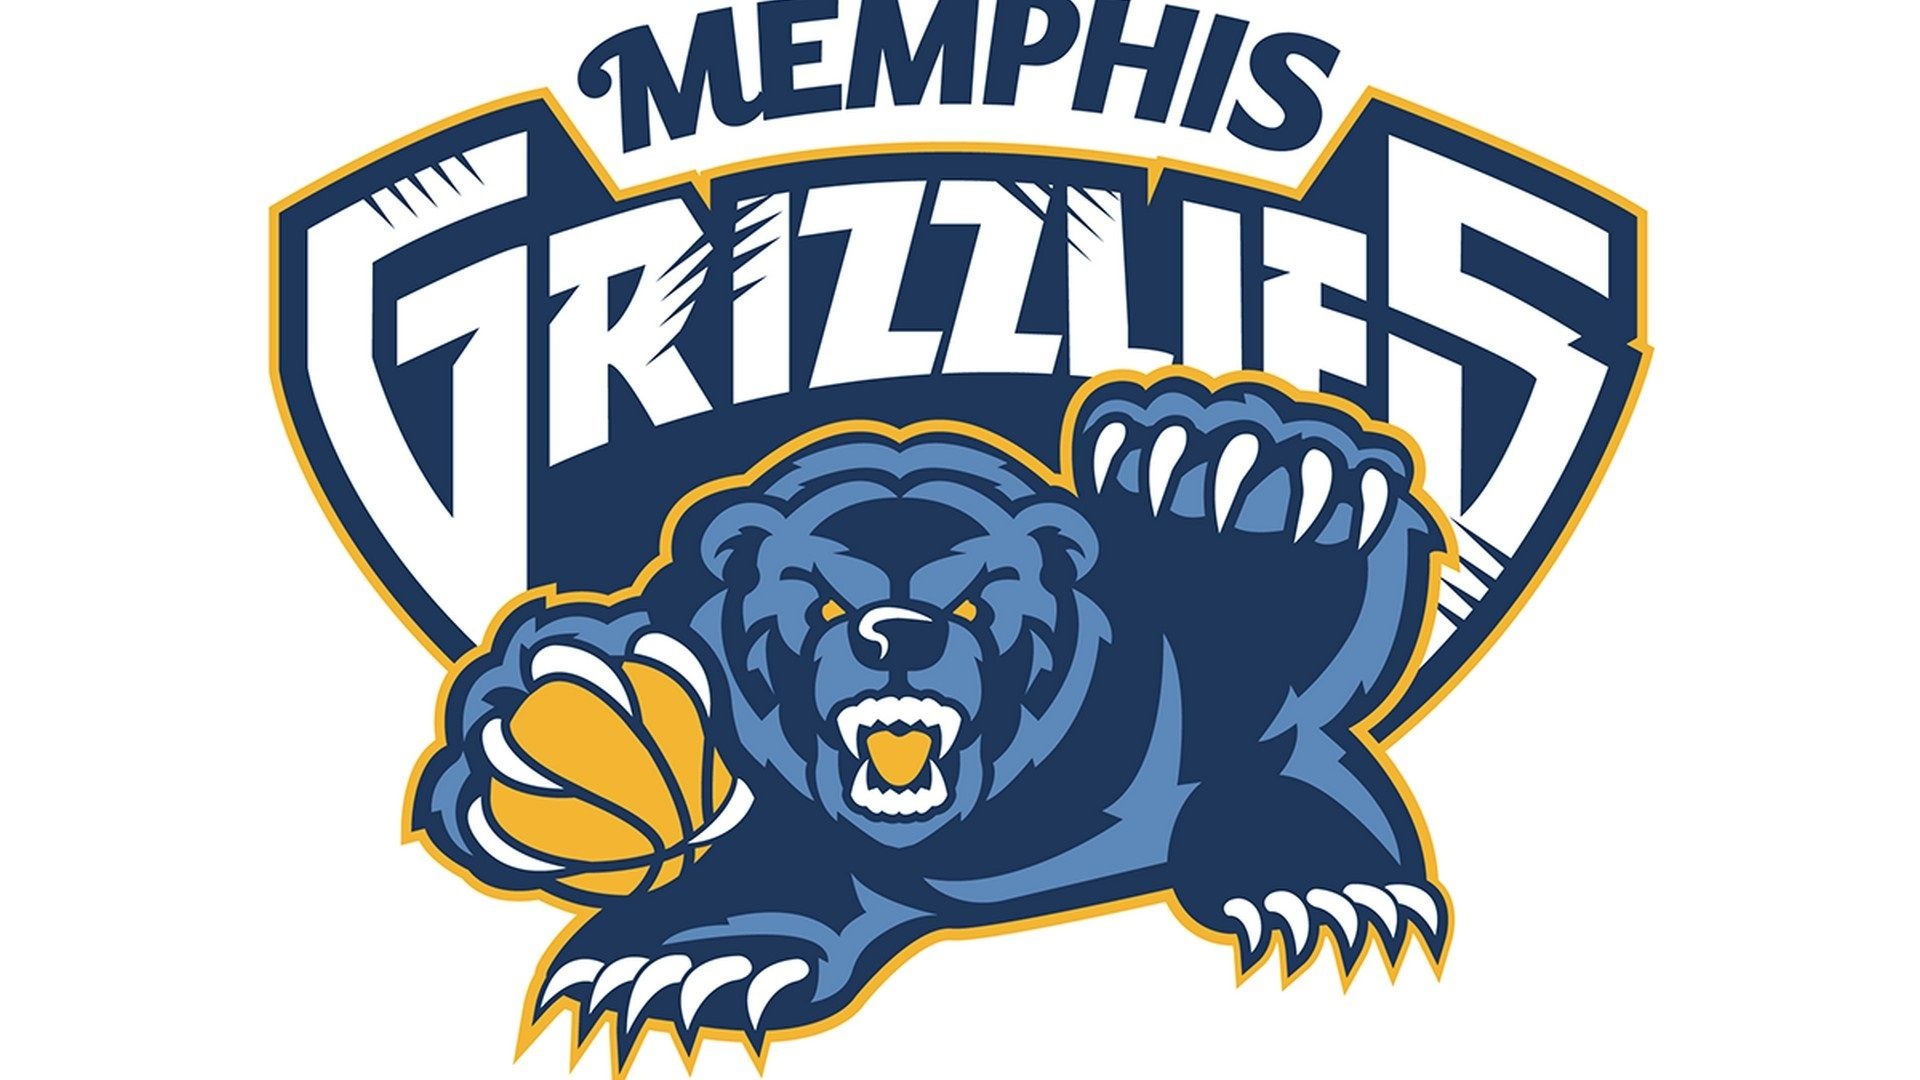 Memphis Grizzlies, PC wallpaper, 2022 basketball season, Lakers vs Grizzlies, 1920x1080 Full HD Desktop